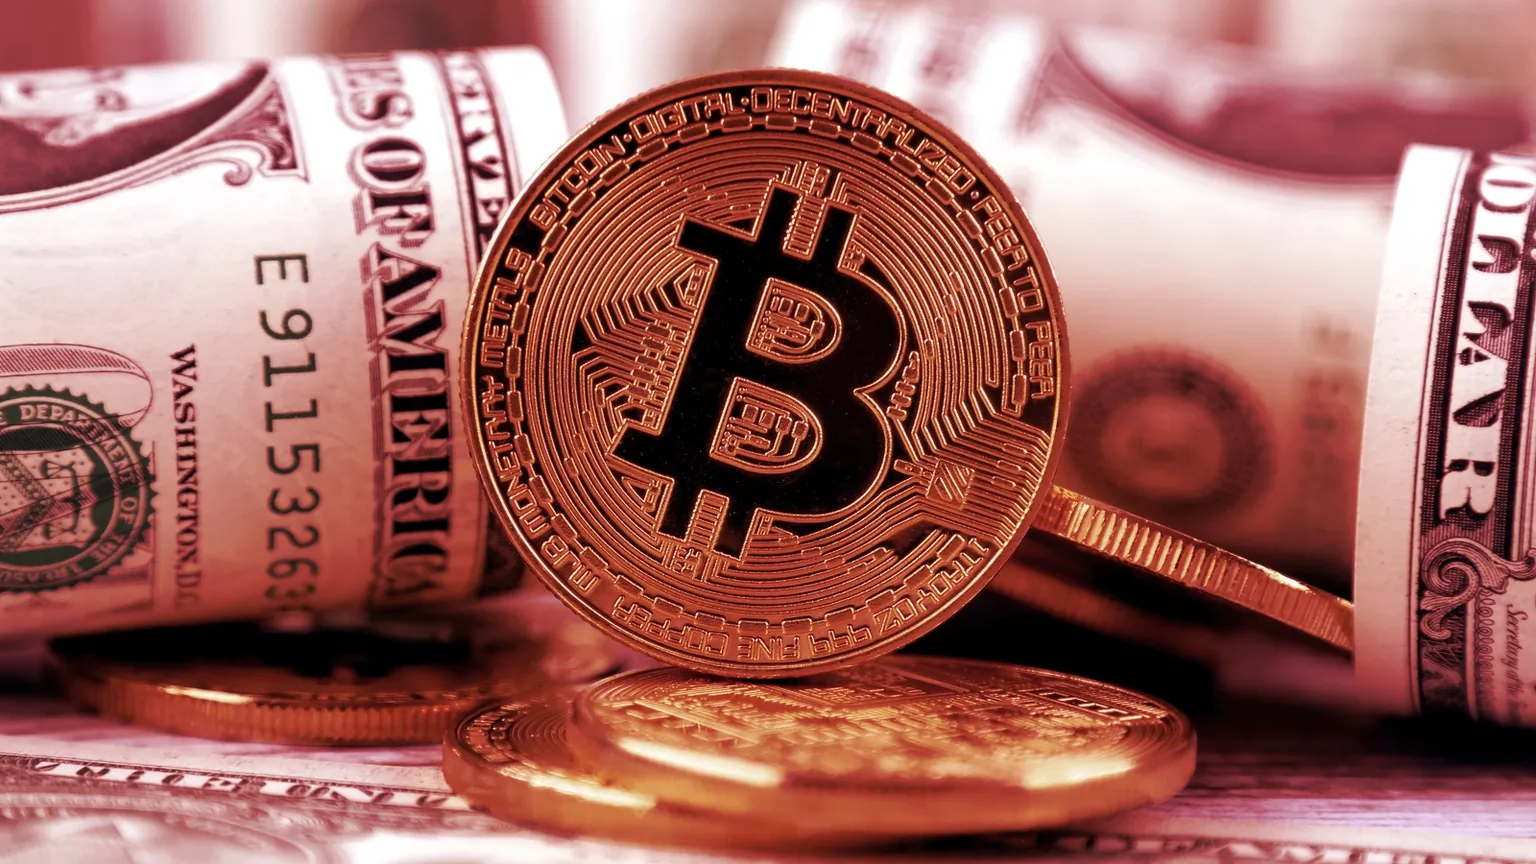 Bitcoin is like digital cash. Image: Shutterstock